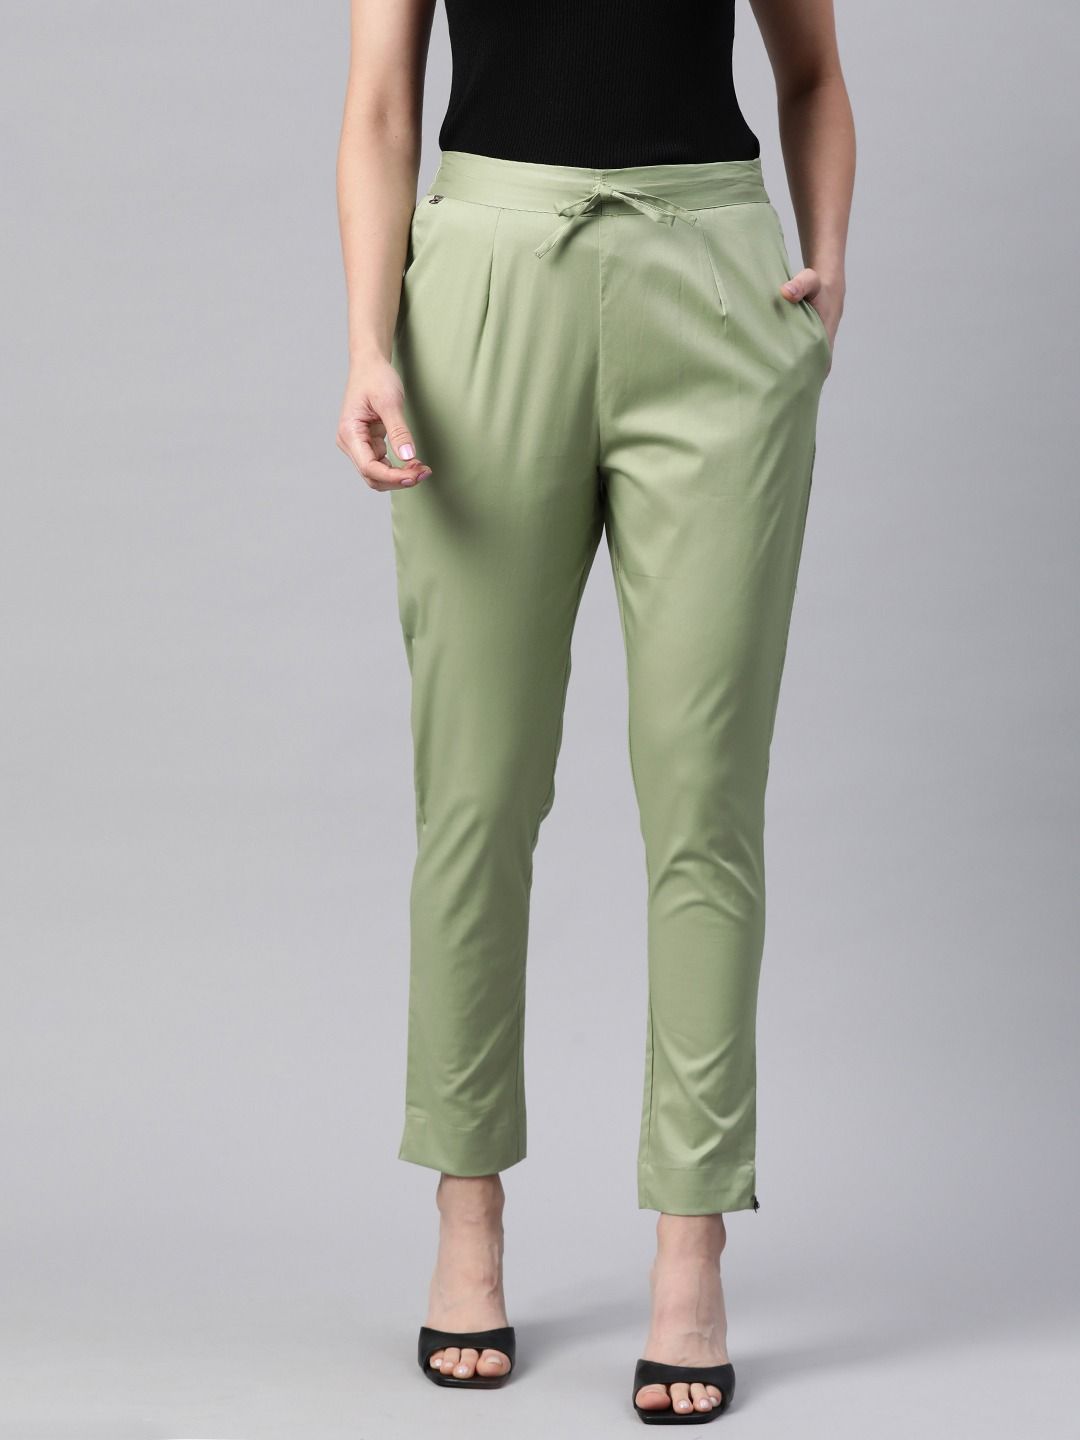 Buy Lycra Pants Womens & Lycra Fabric Pants - Apella